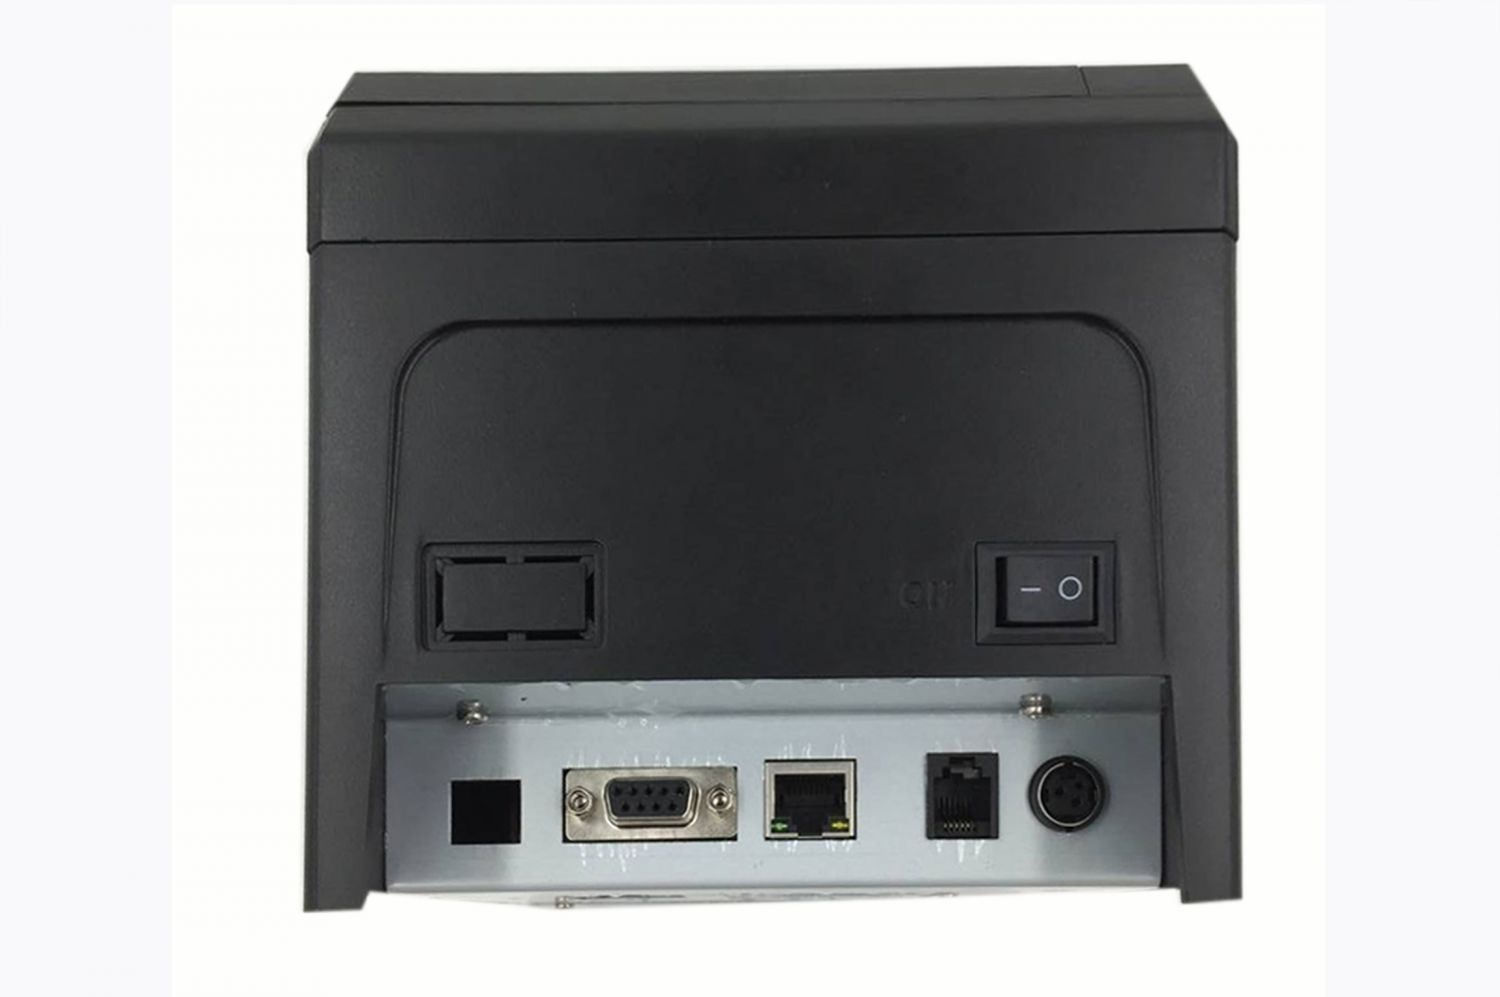 56005 - Impre. Trmica UNYKA Negro papel 80mm,576/512ppp, usb, RJ12, Rs232 y RJ45. (56005)